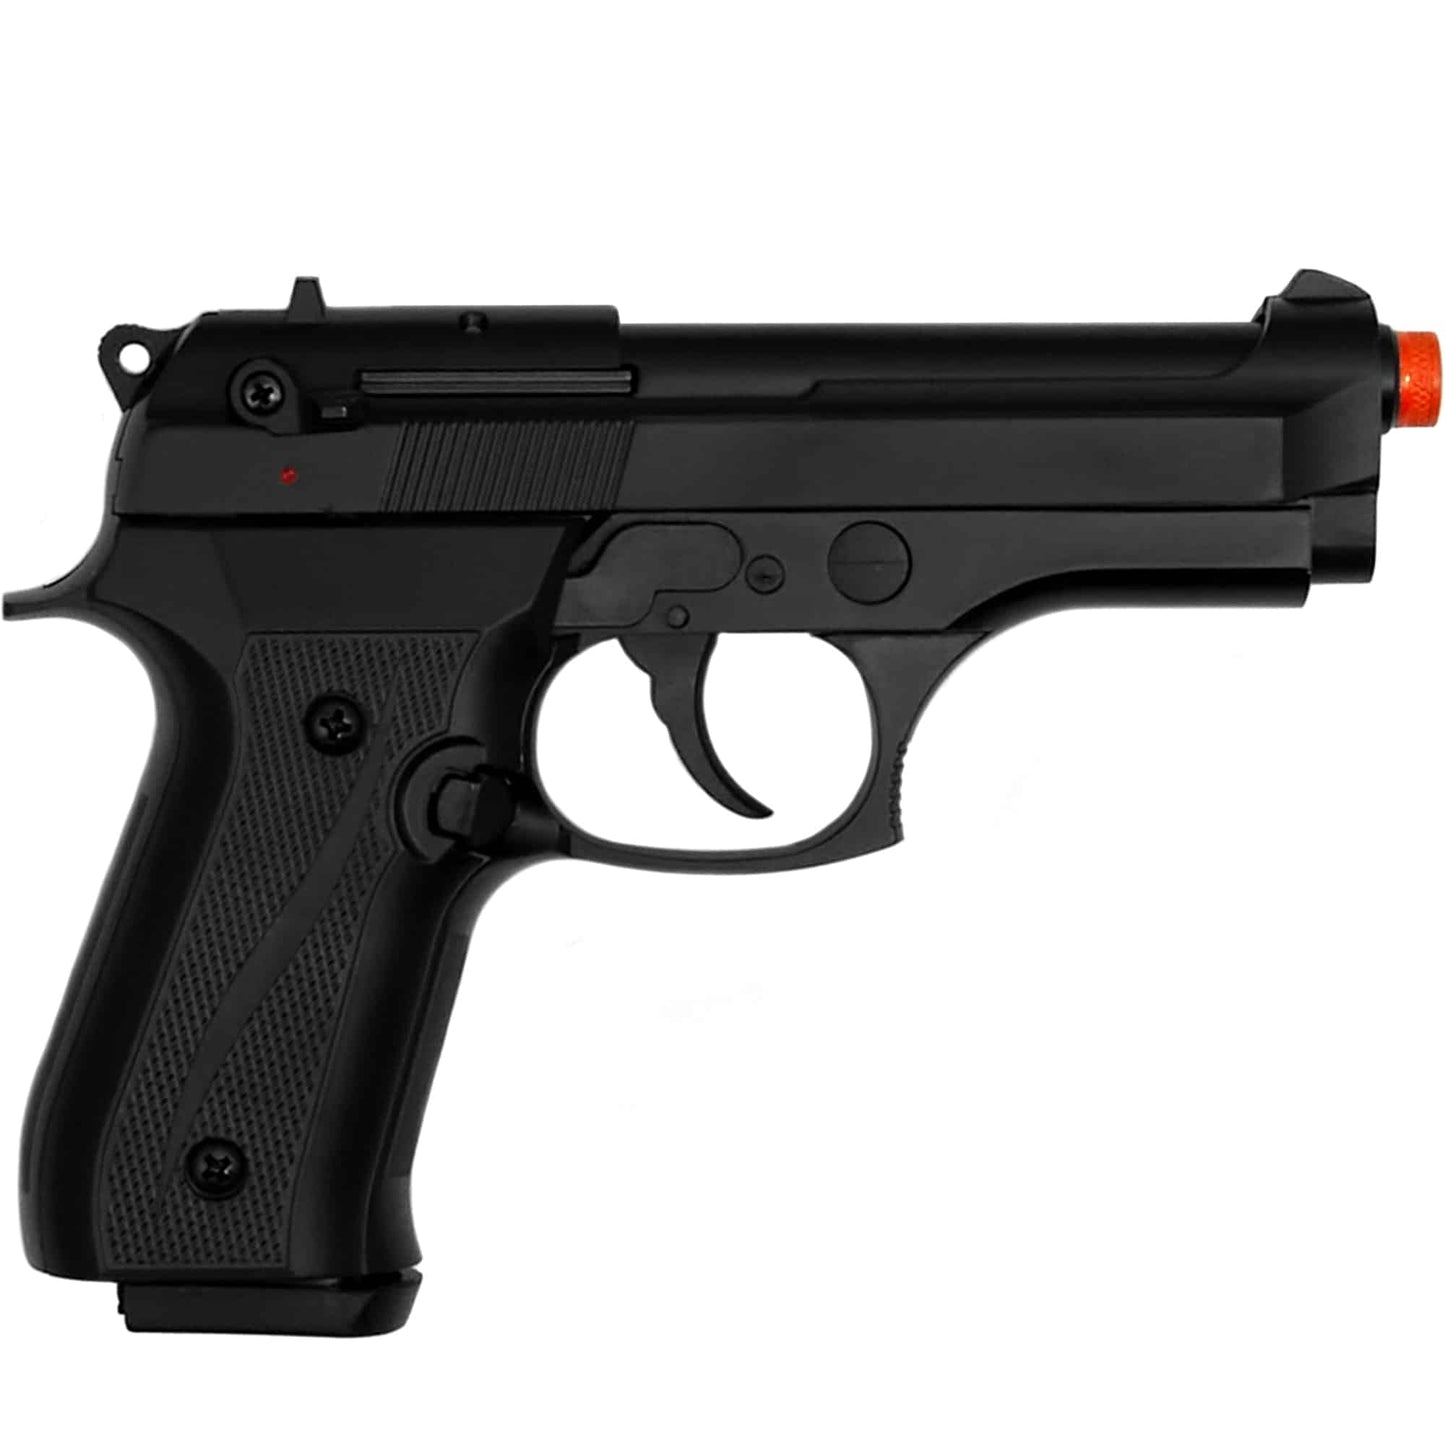 Jackal Dual Compact 9mm Pistol Black Finish- Blank Firing